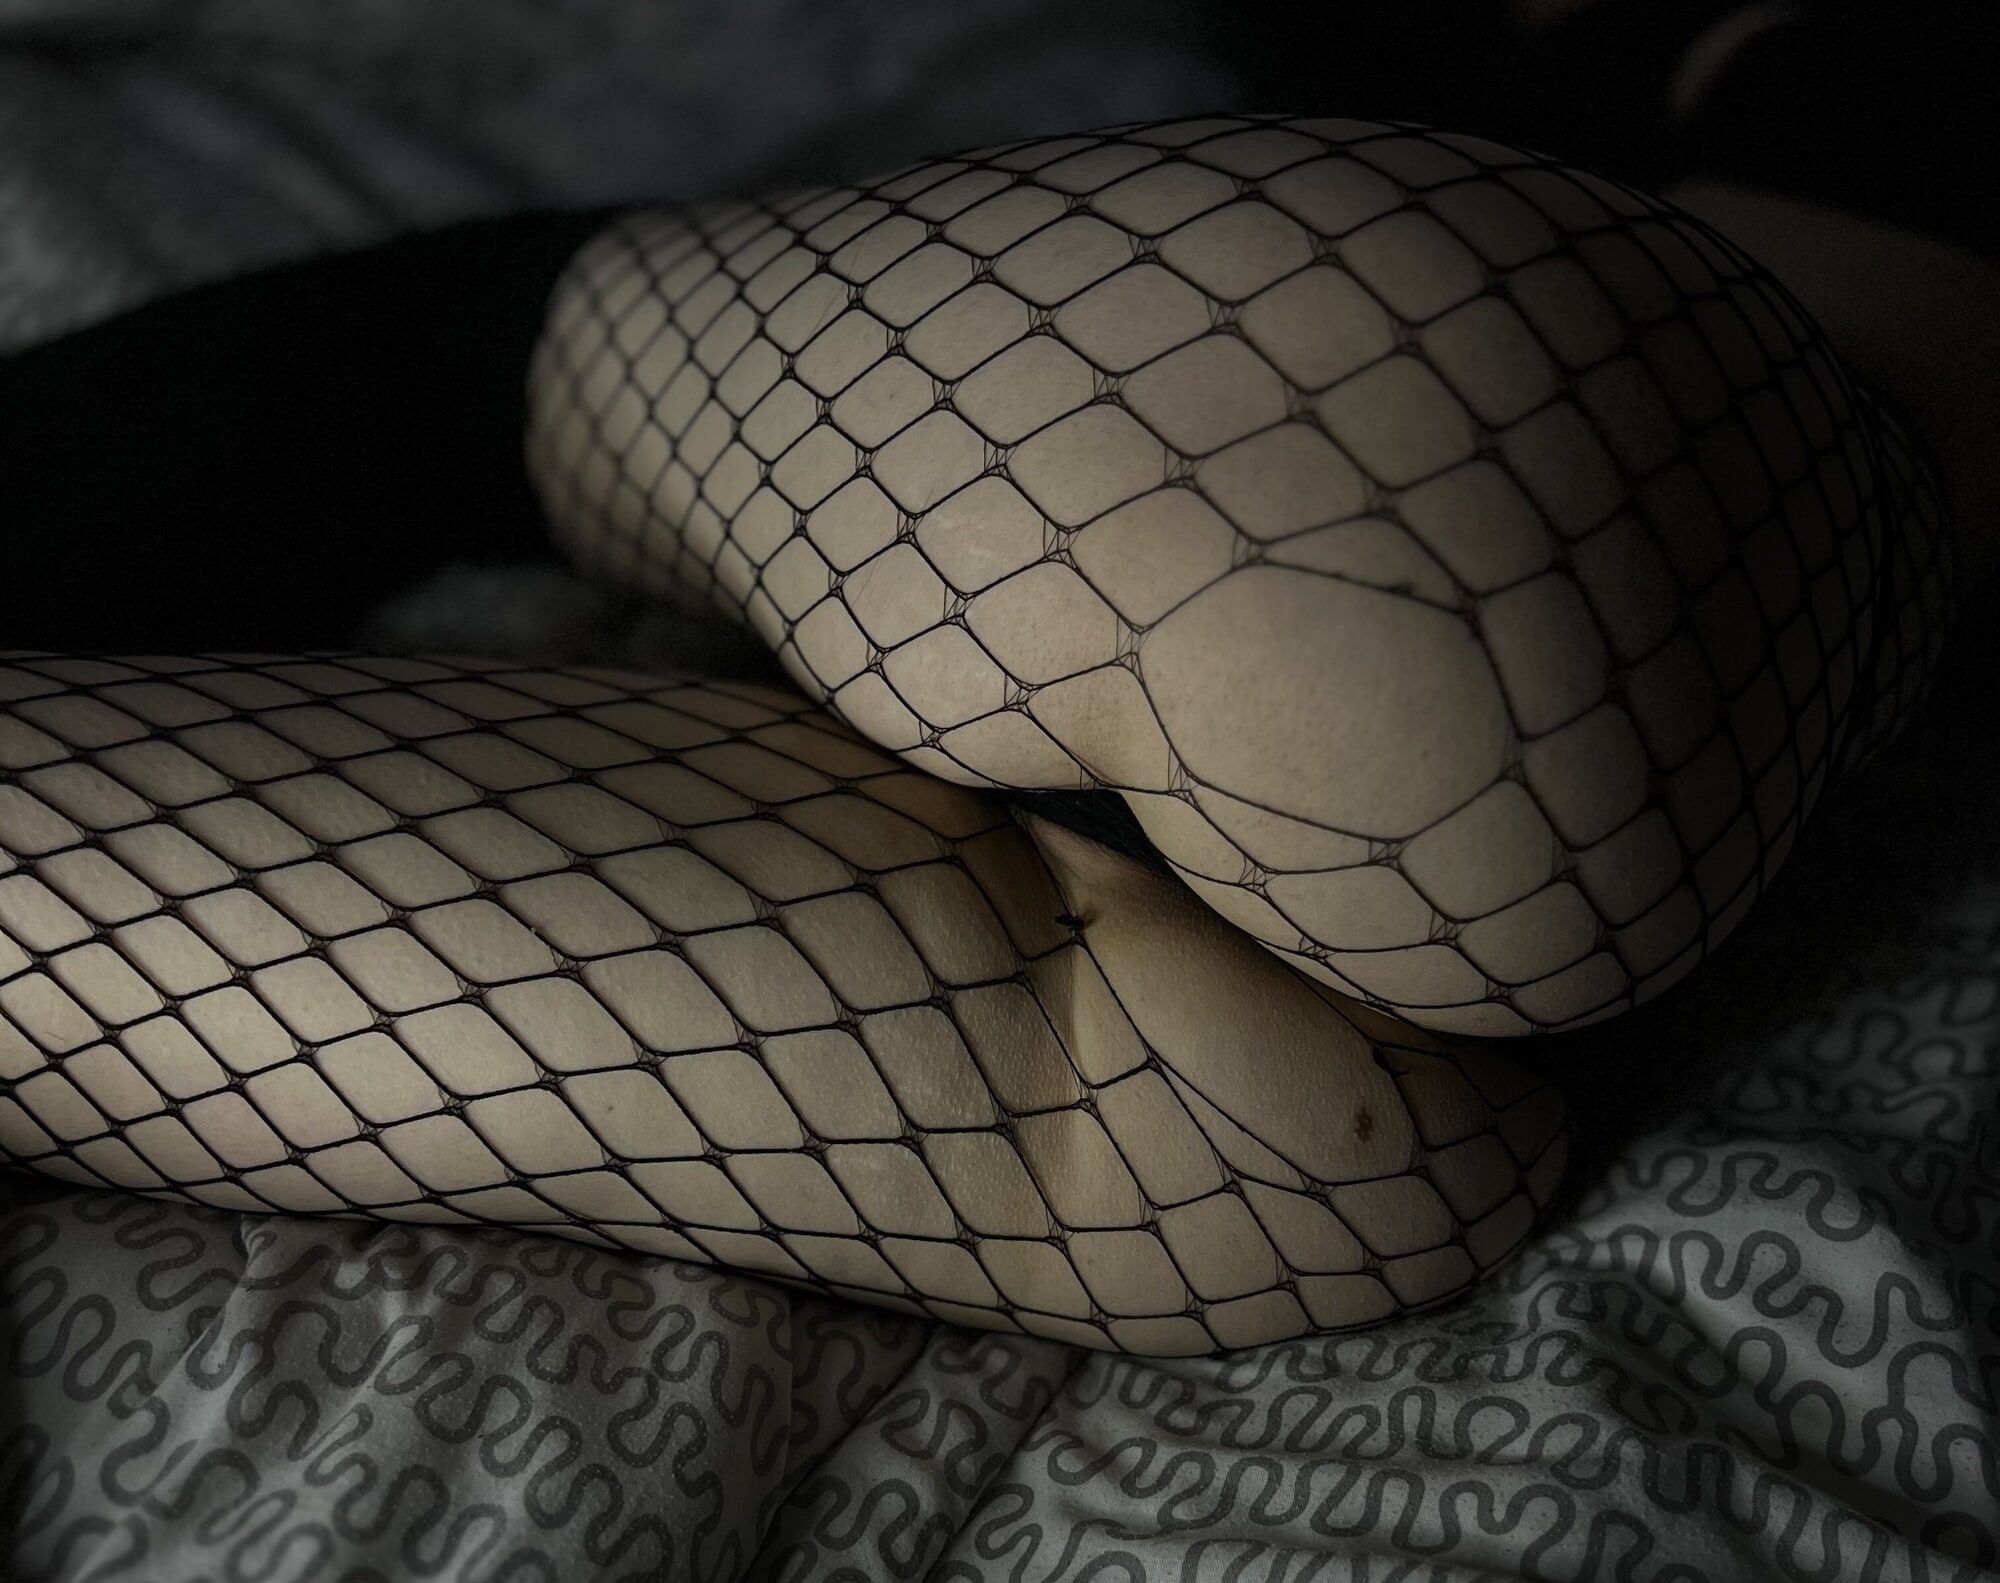 SEXY BED PICS 🔥 #2